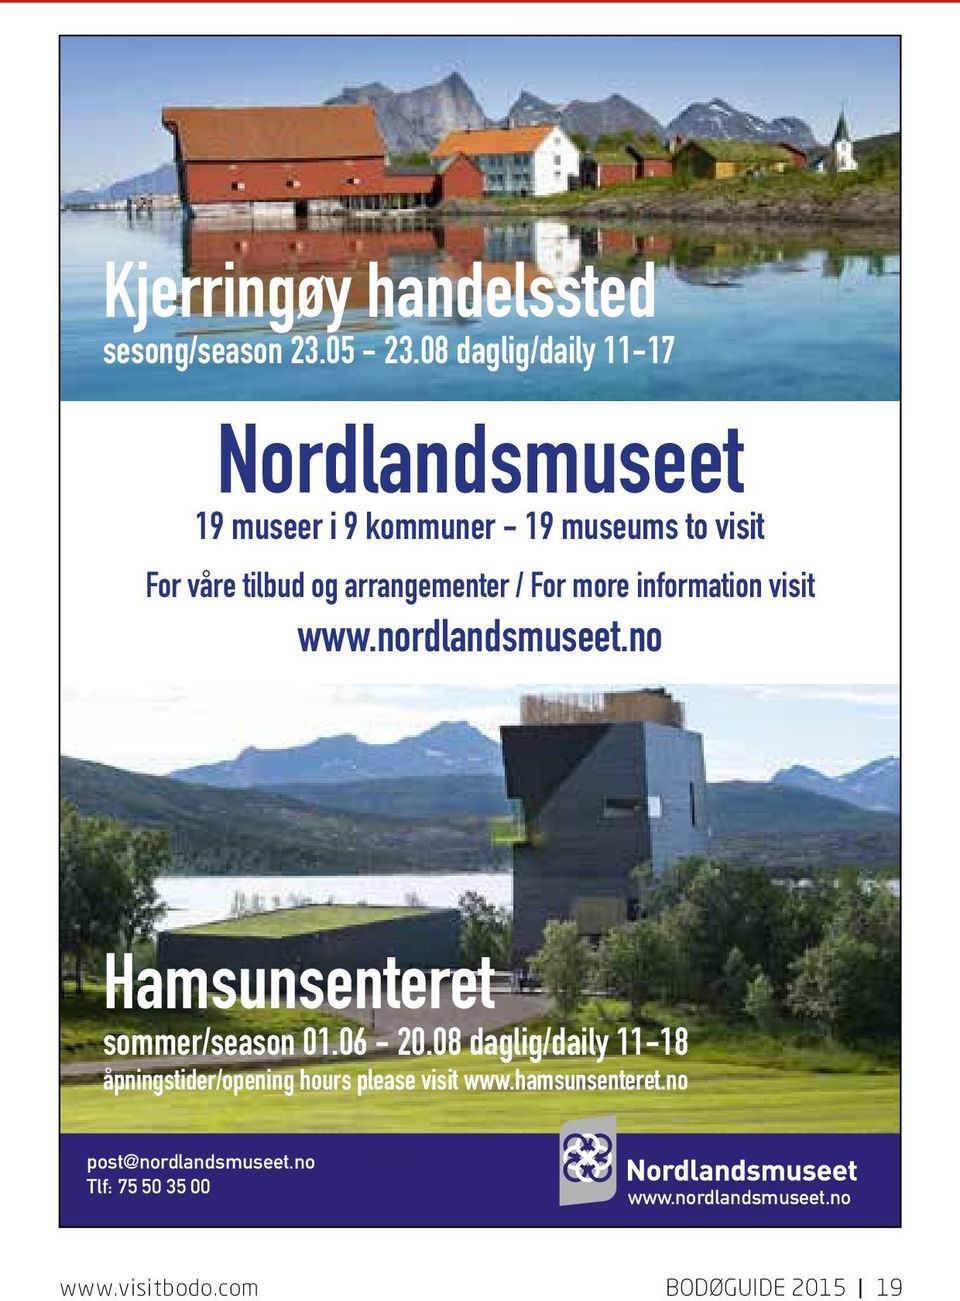 wwwordladsmuseeto Hamsuseteret sommer/seaso 0106 2008 daglig/daily 1118 åpigstider/opeig